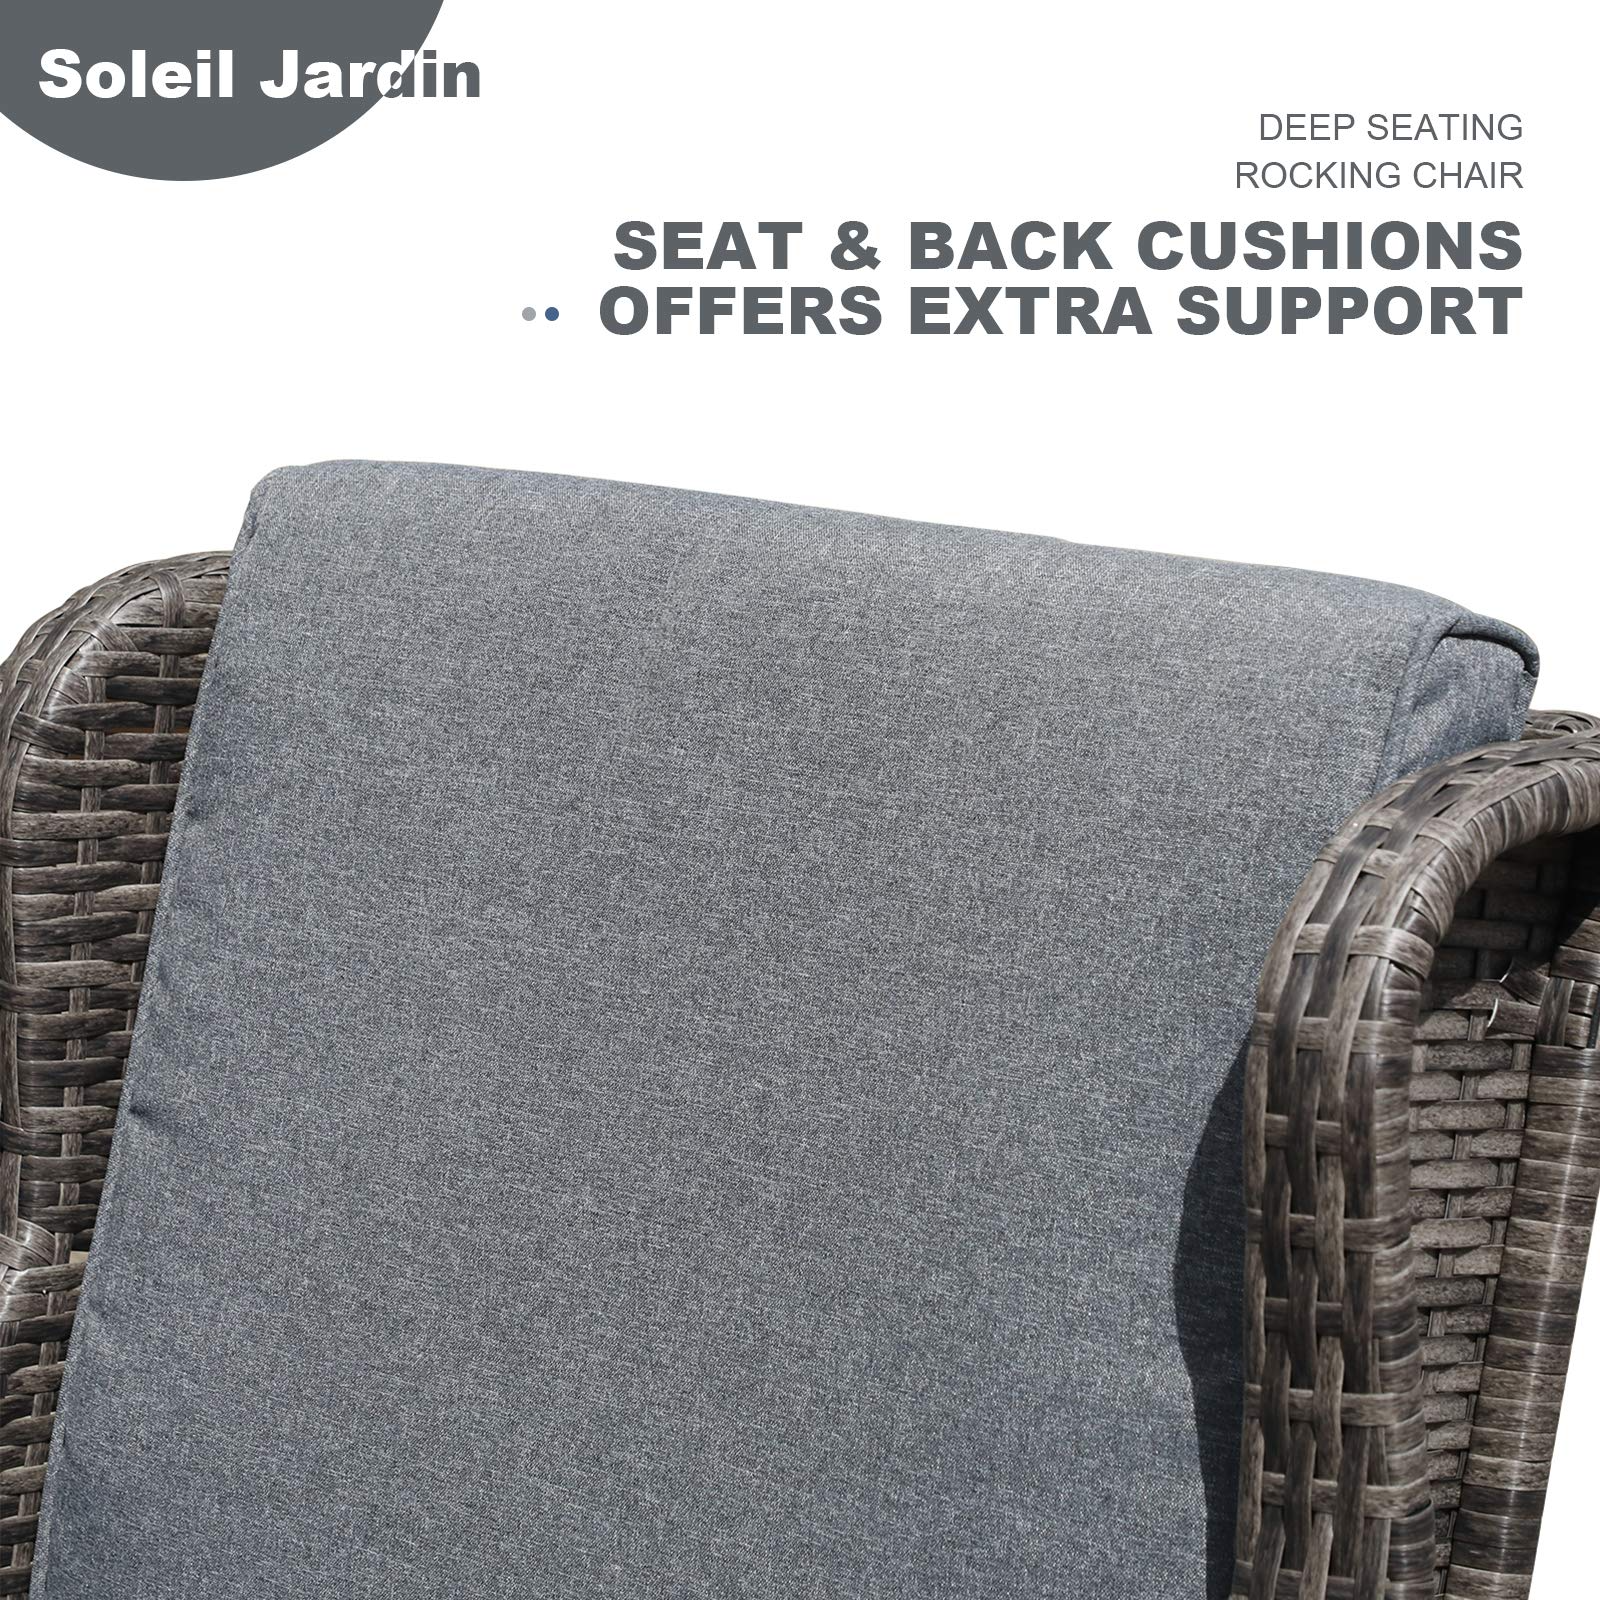 Soleil Jardin Wicker High Back & Slat Back Rocking Chair, Gray - image 5 of 7